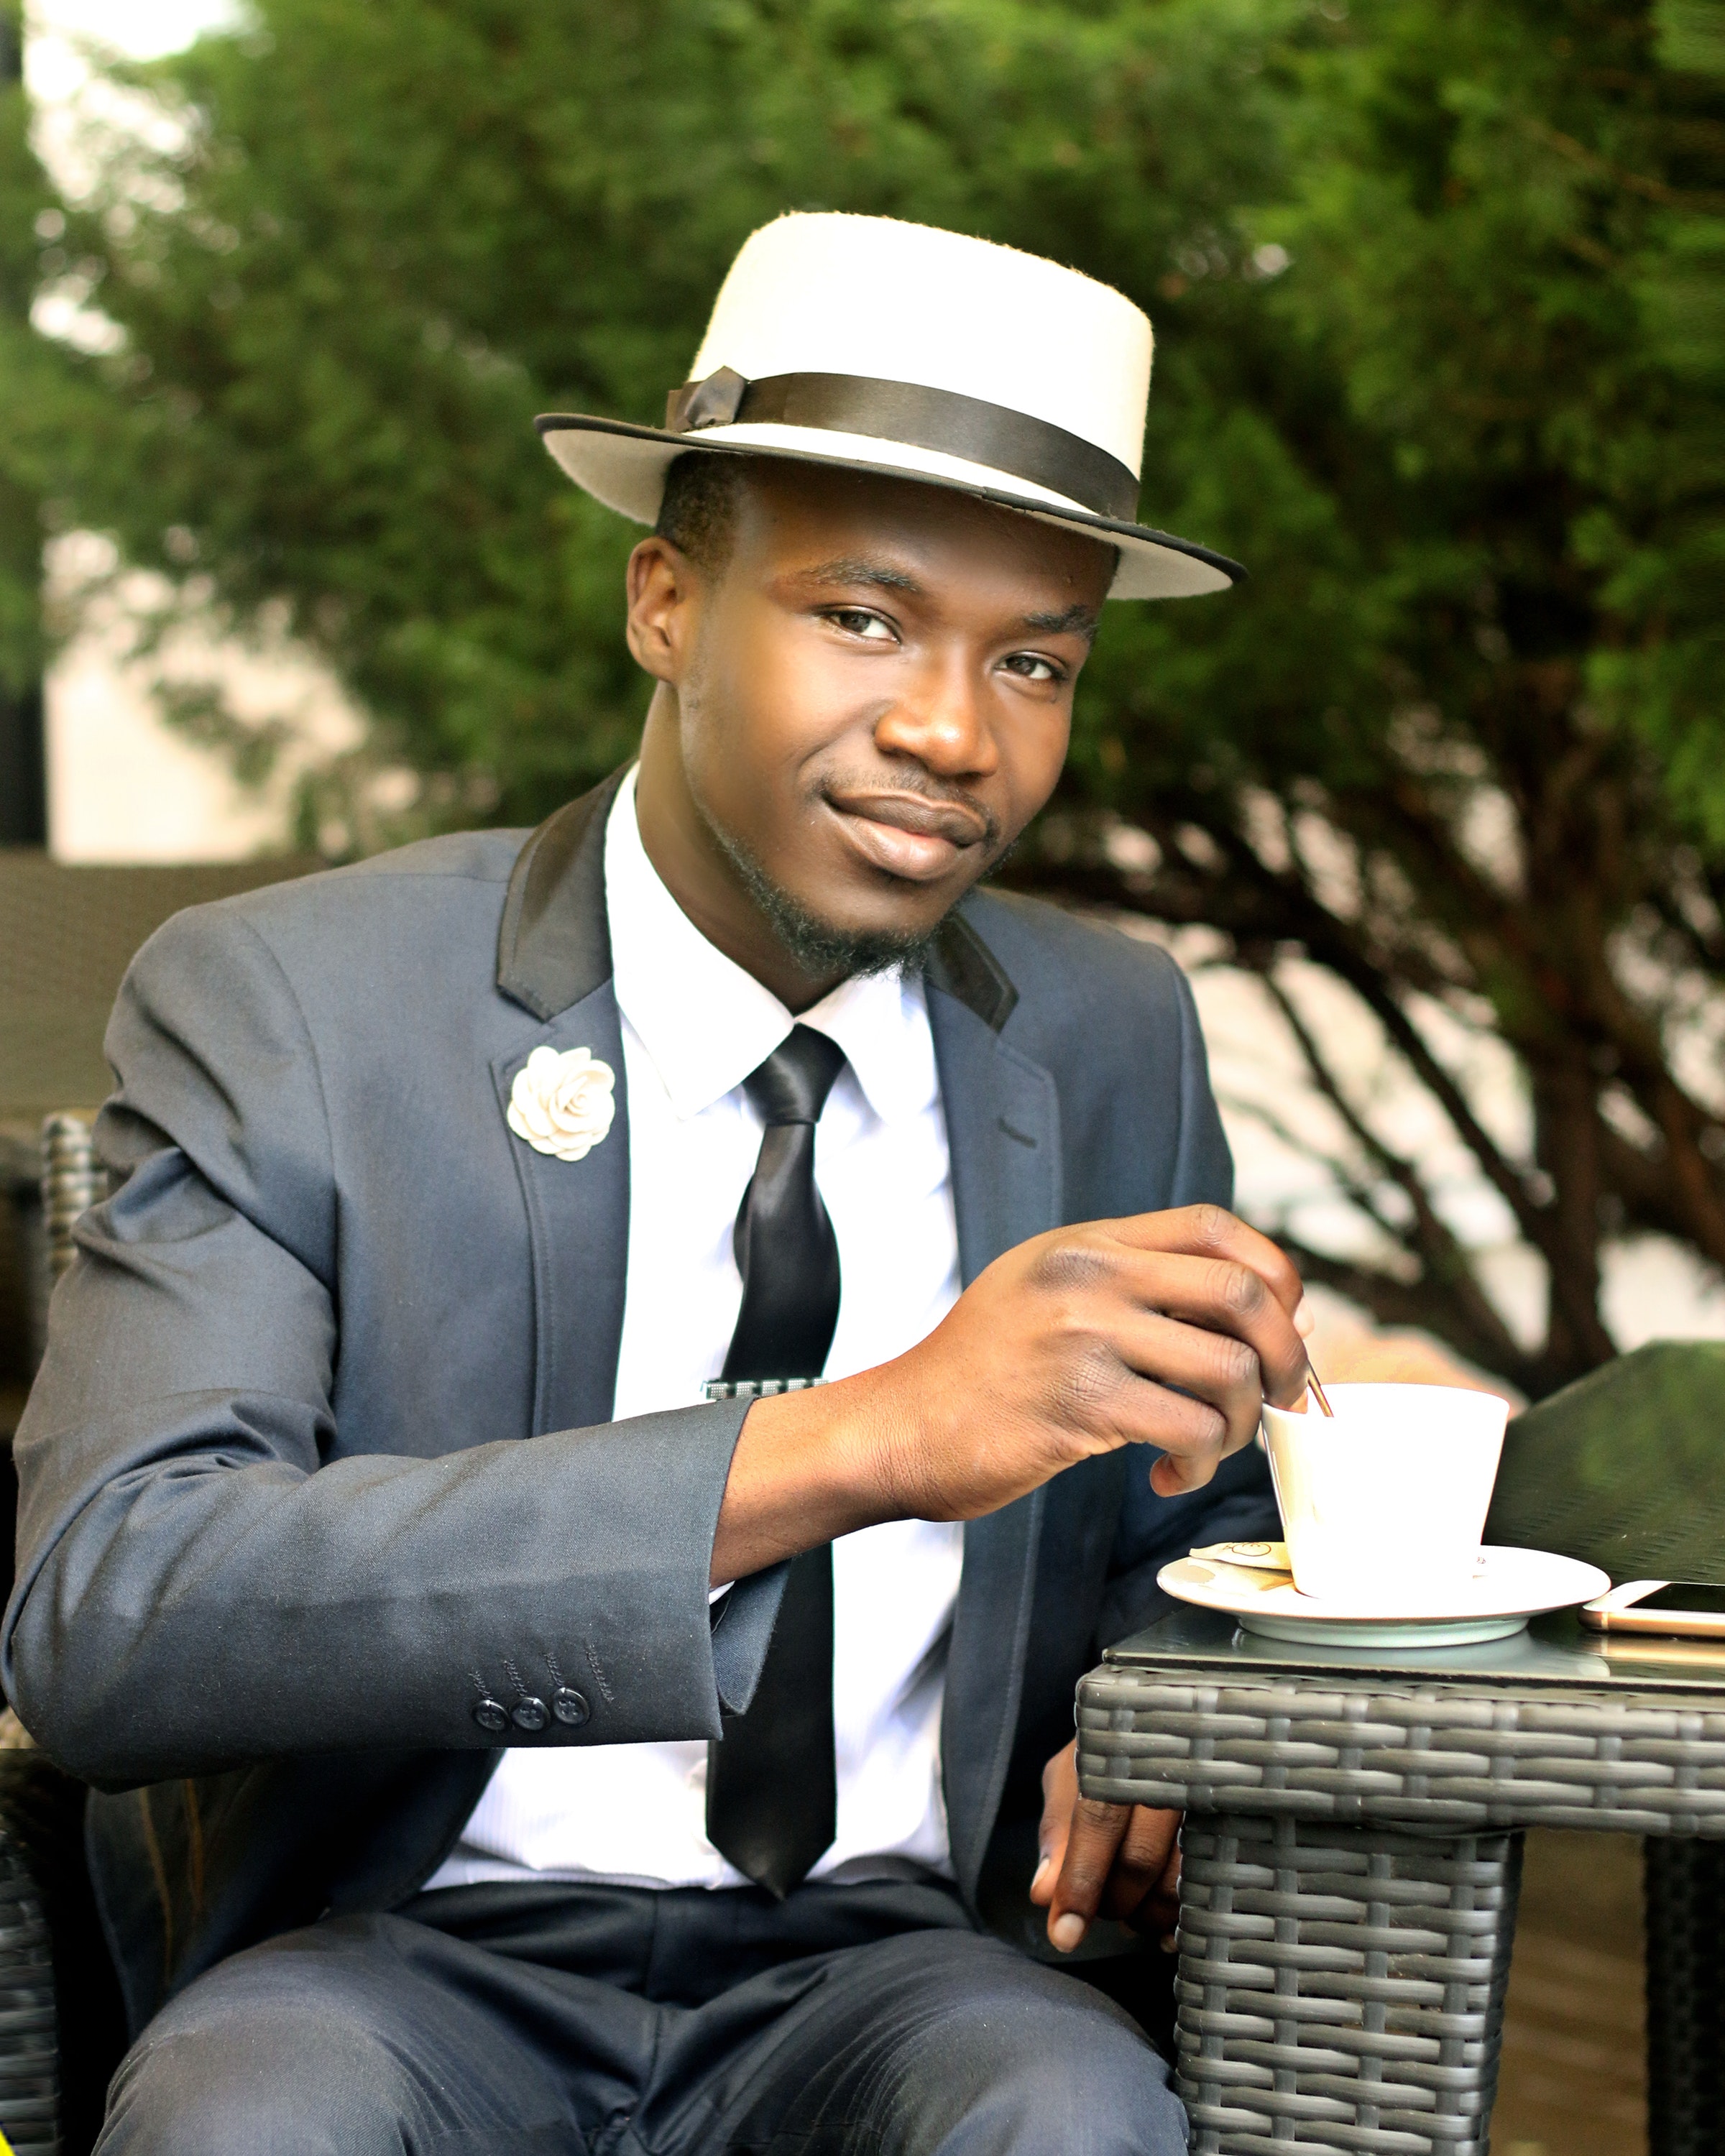 Man in gray formal suit jacket stirring coffee during daytime photo